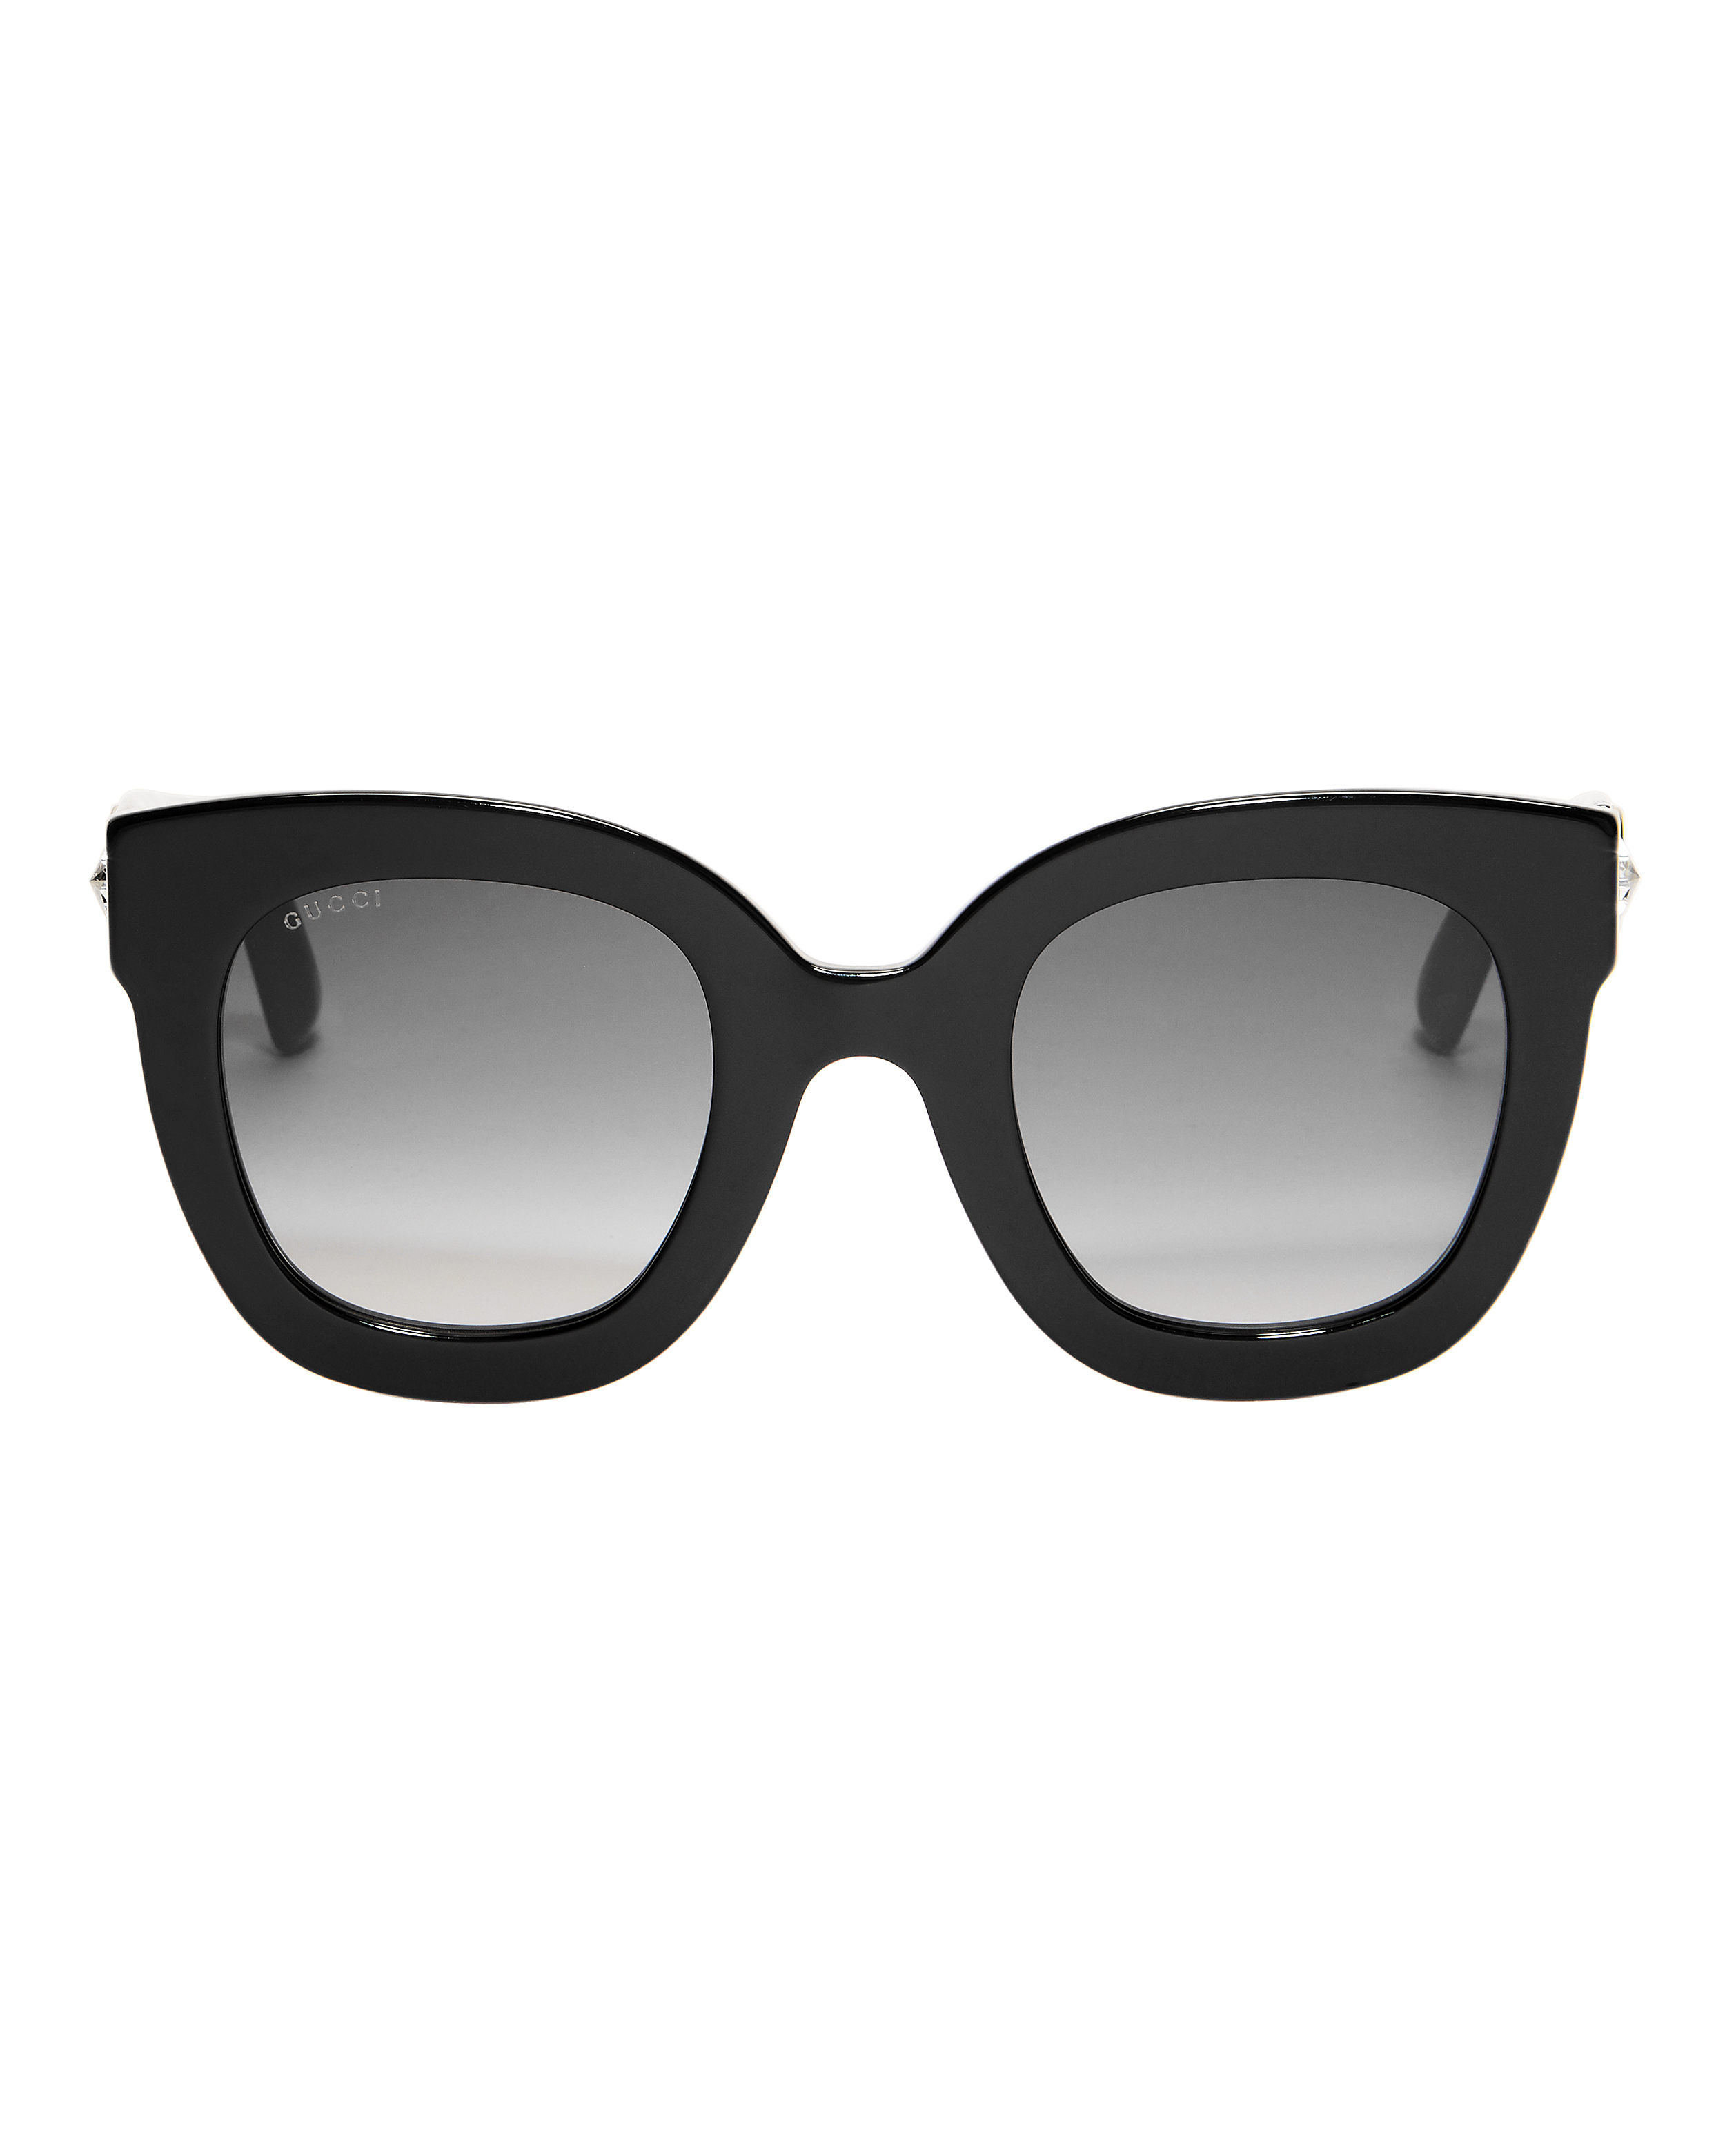 Swarovski Star Cat Eye Sunglasses | INTERMIX®